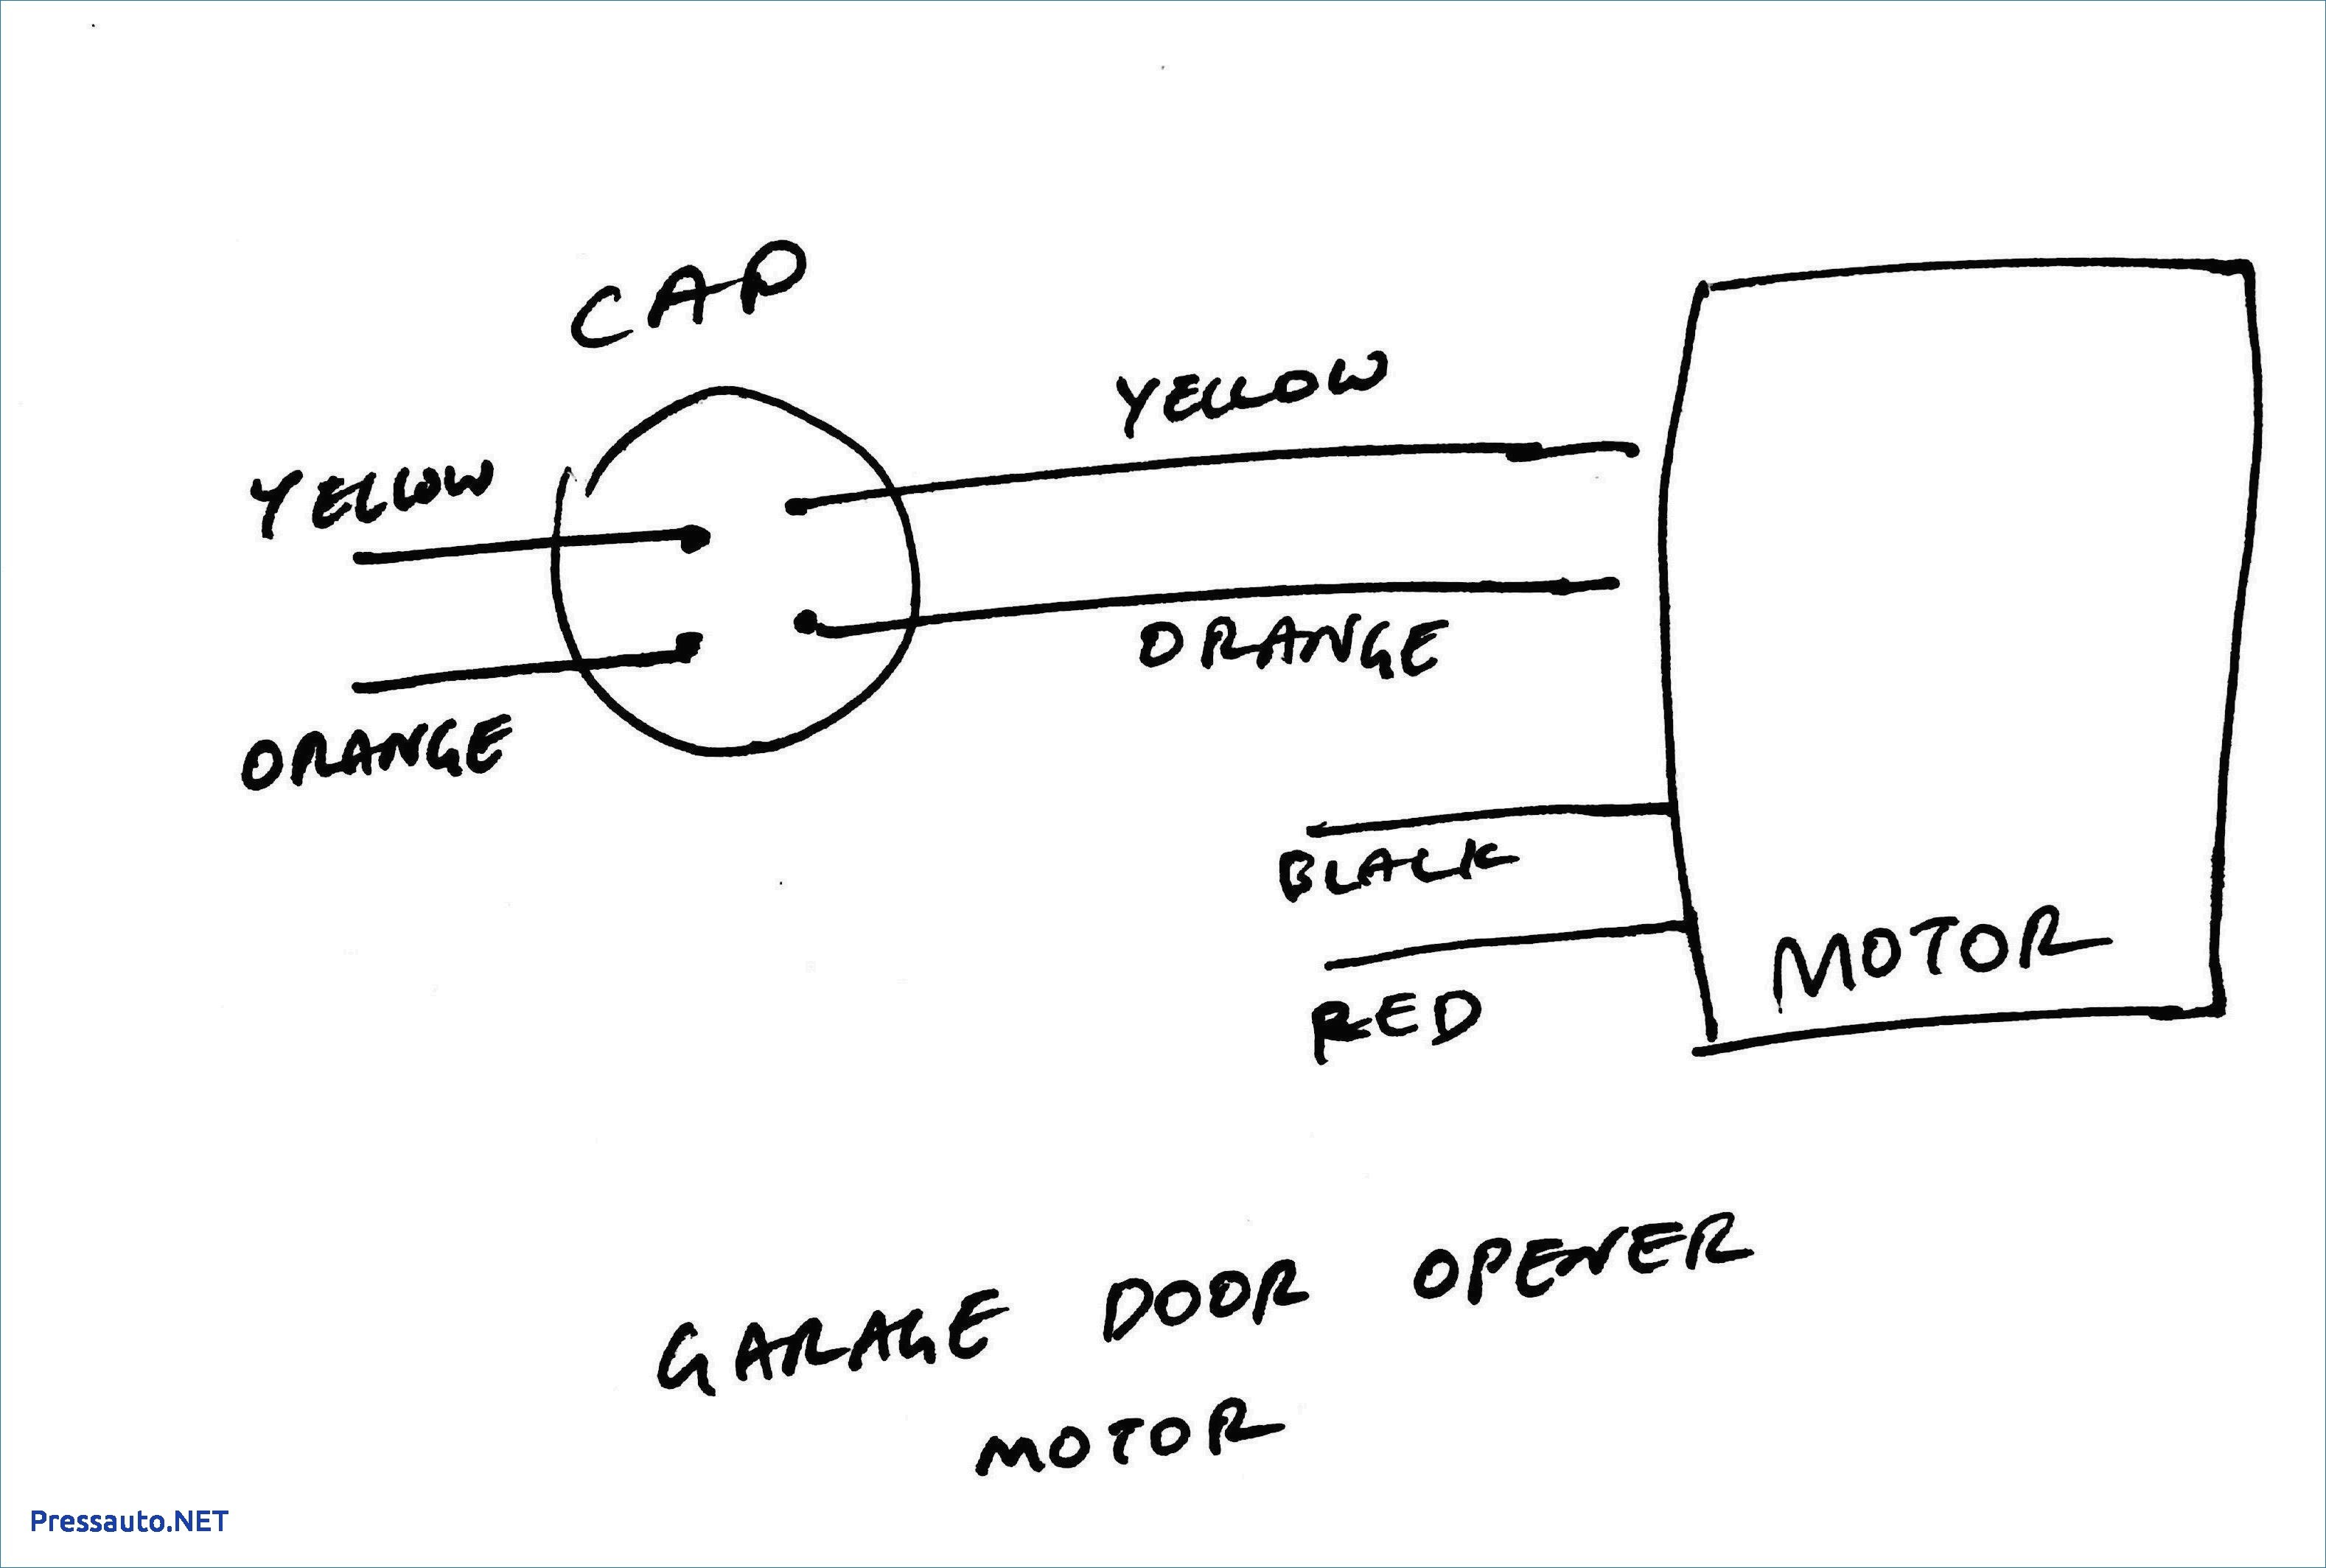 Capacitor Start Run Motor Wiring Diagram Website at Tryit Me In 59 Best Capacitor Start